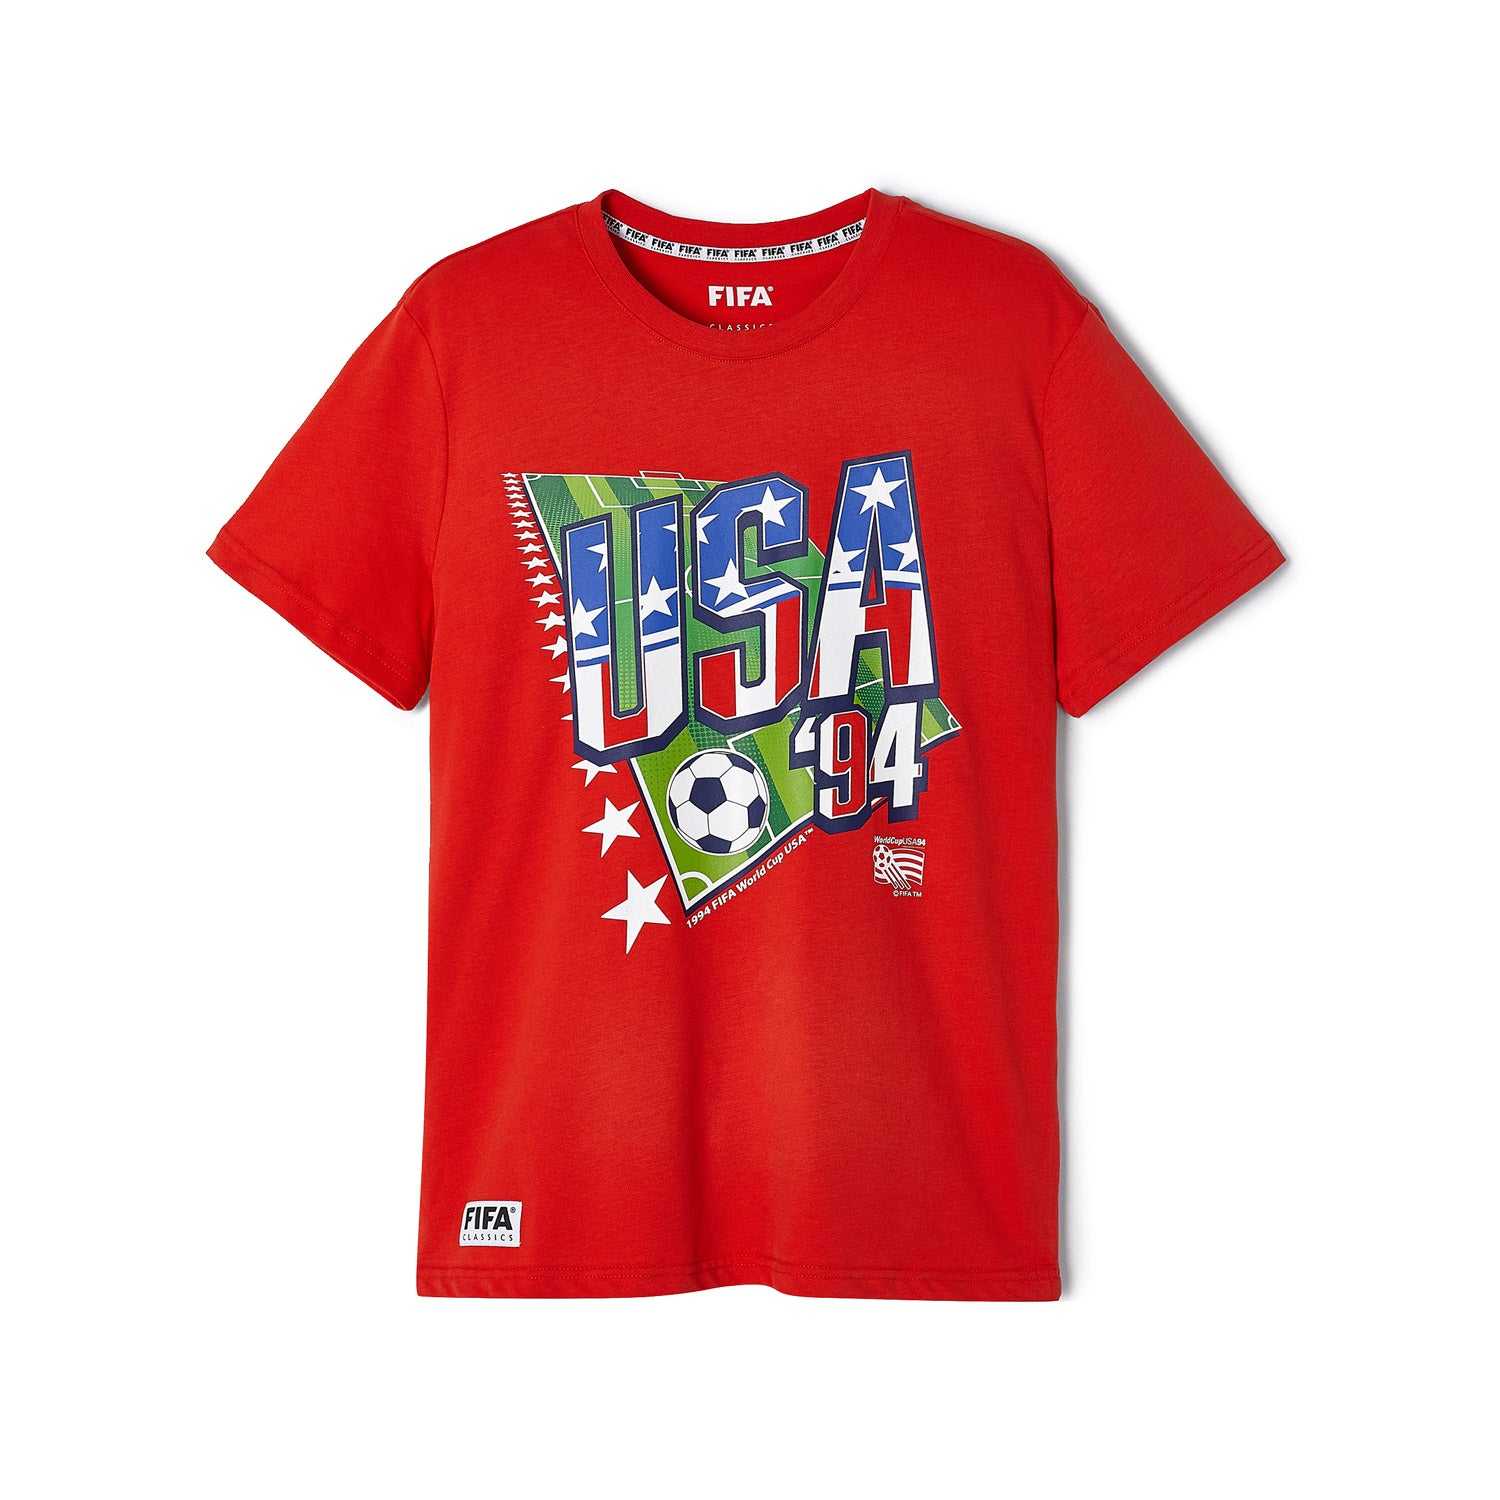 FIFA Rewind USA '94 Retro T-Shirt - Men's